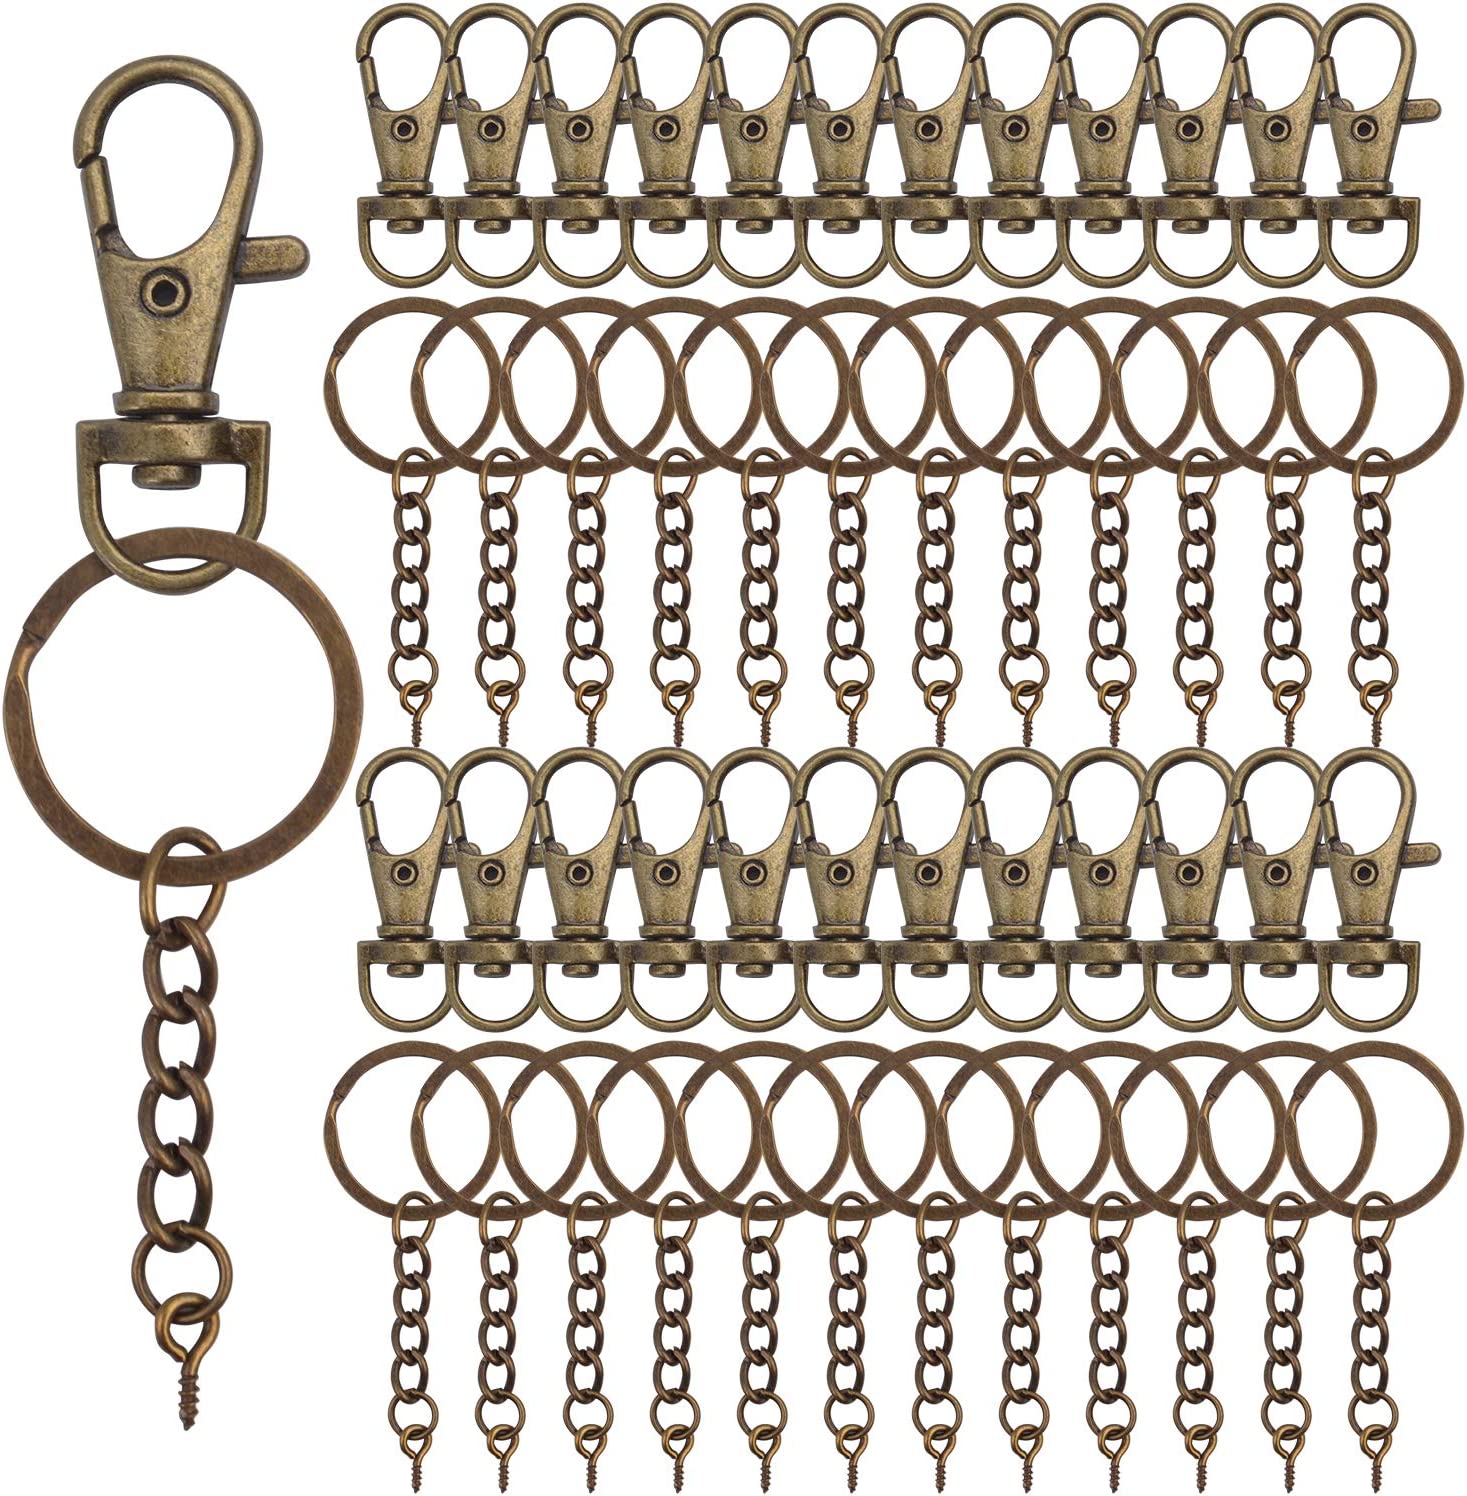  100PCS Premium Swivel Snap Hooks with Key Rings,Metal